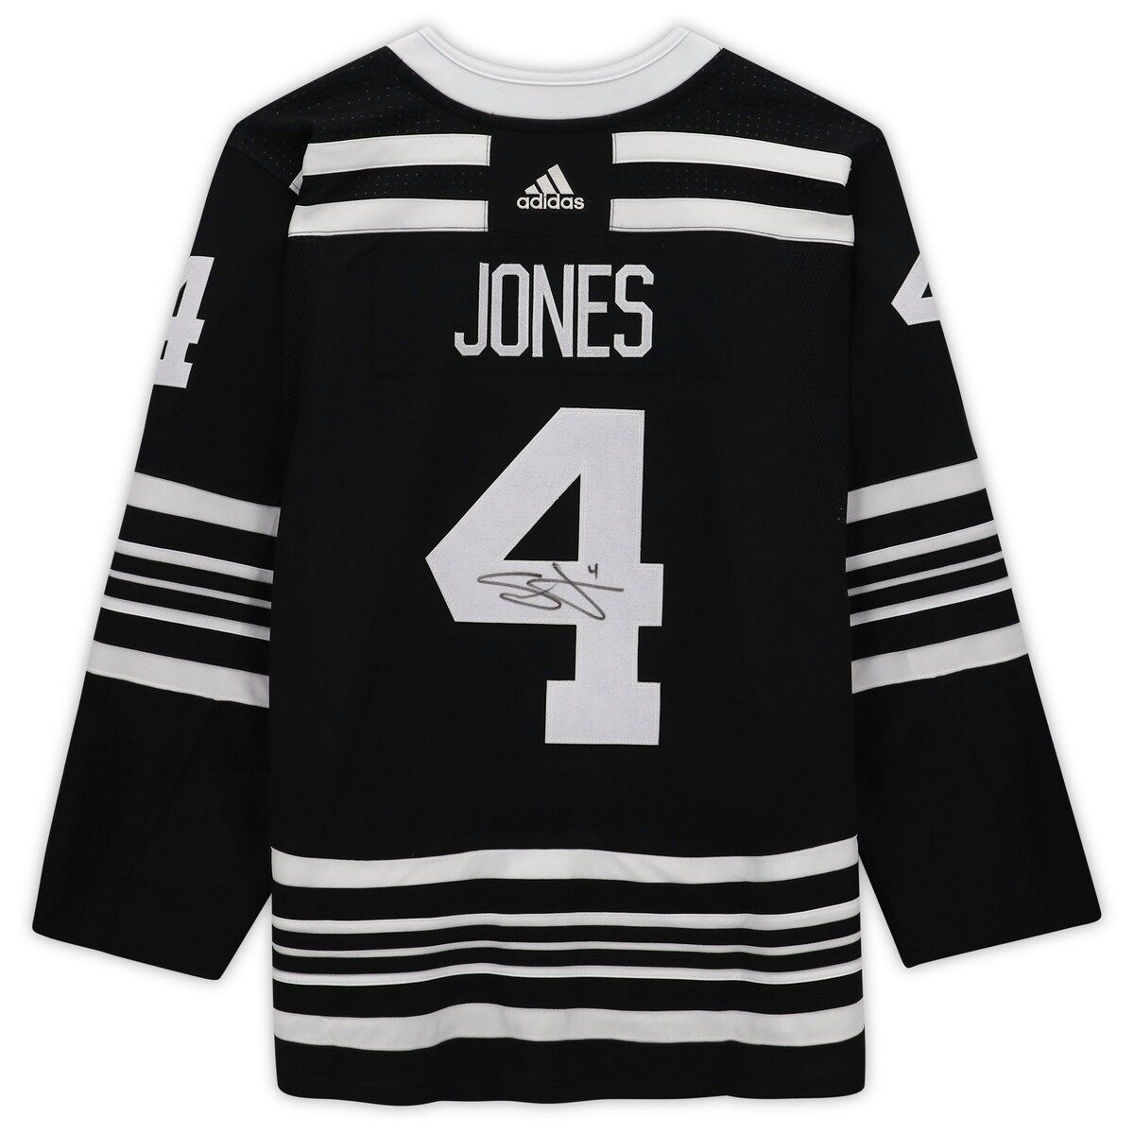 Fanatics Authentic Seth Jones Black Chicago Blackhawks Autographed Alternate Authentic Jersey - Image 3 of 4